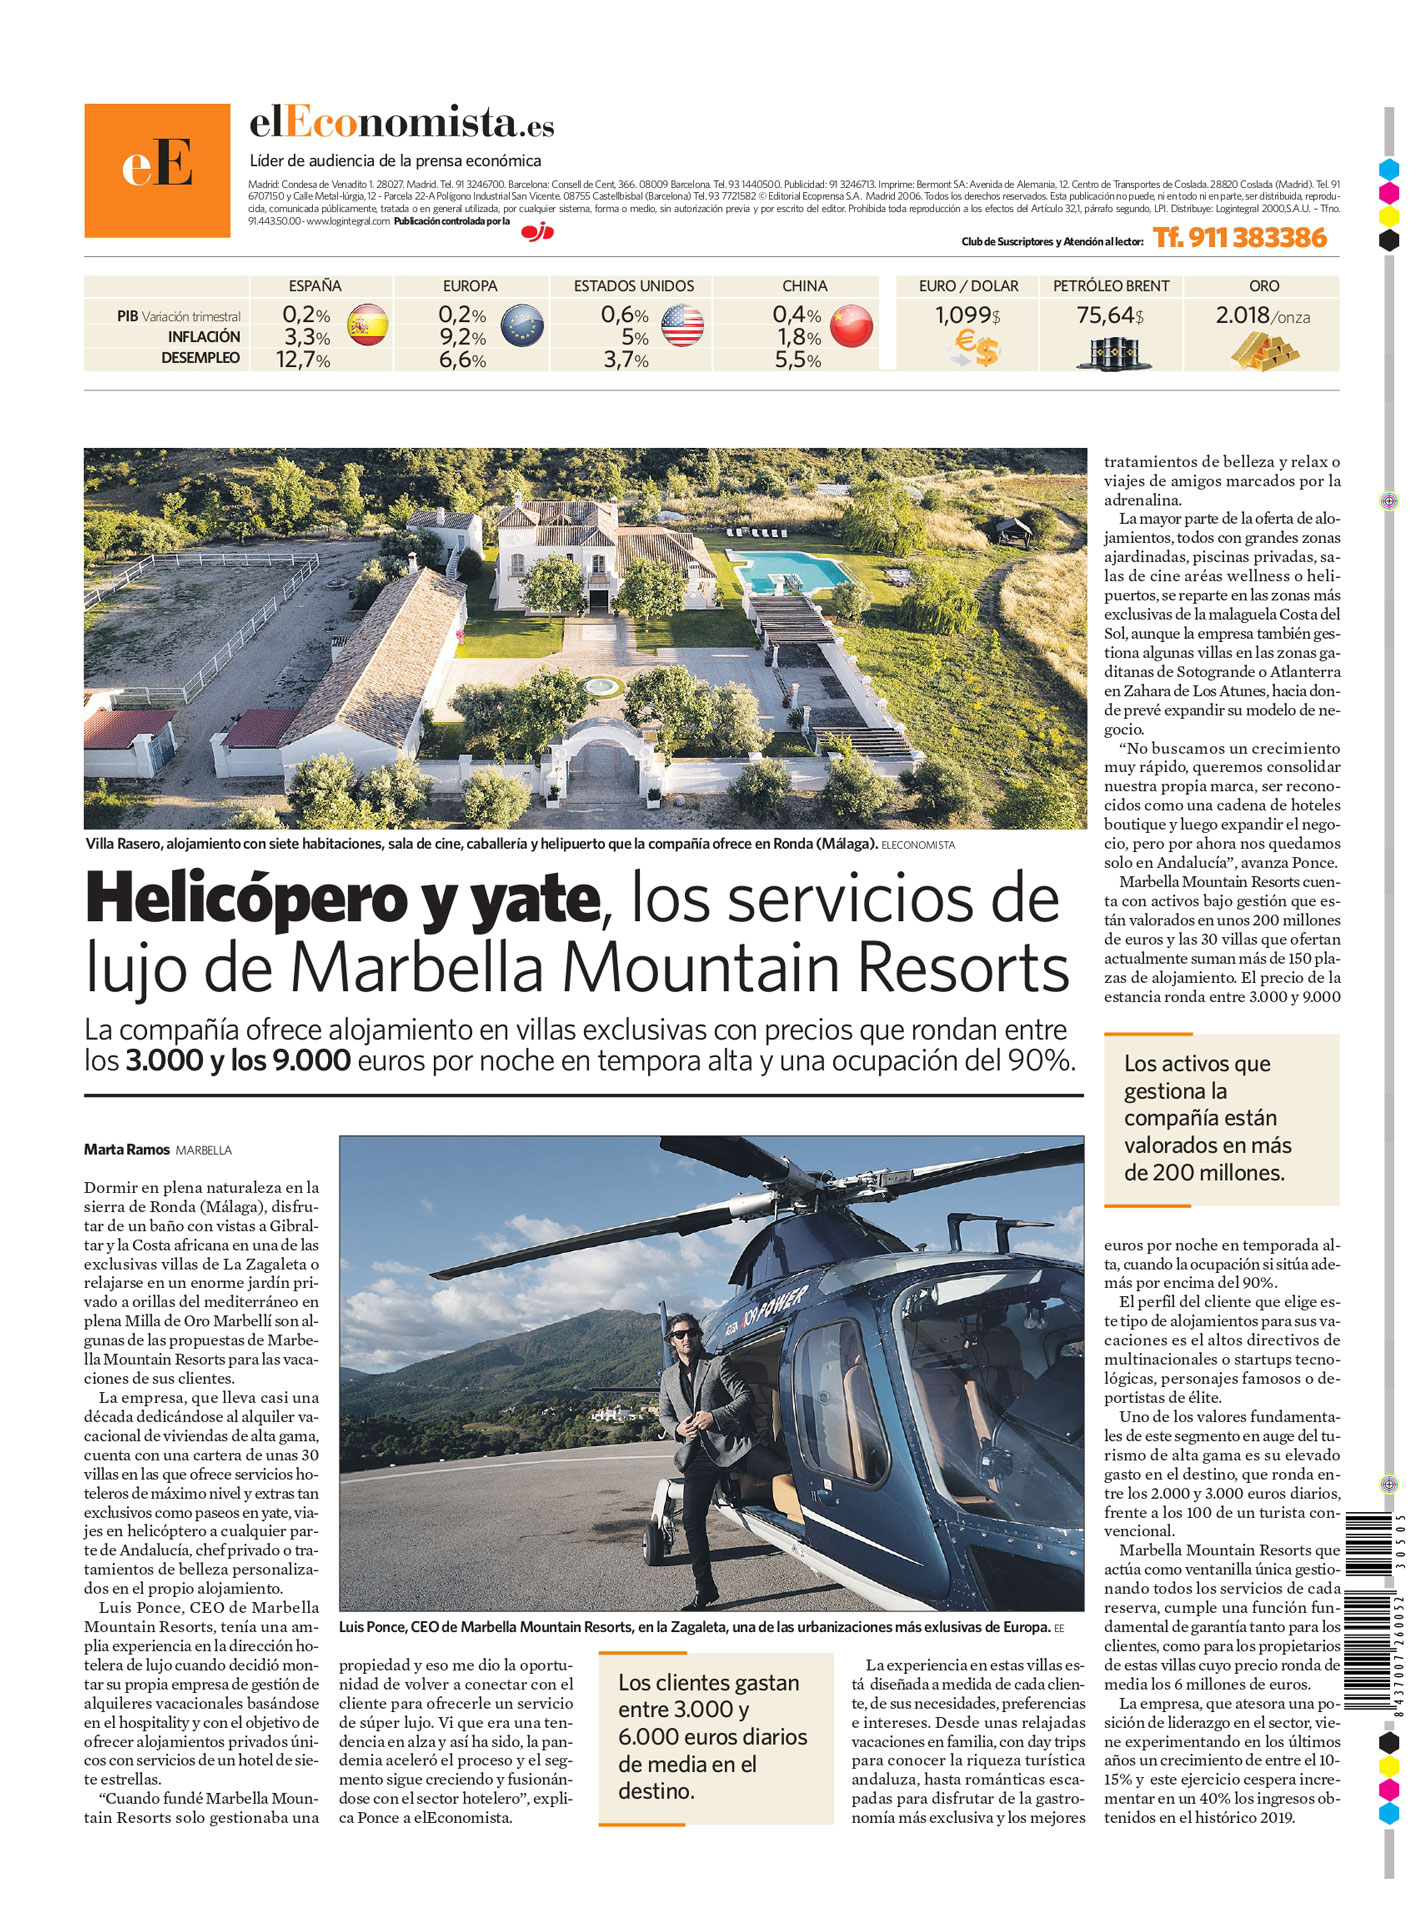 Luis ponce headlines in El Economista